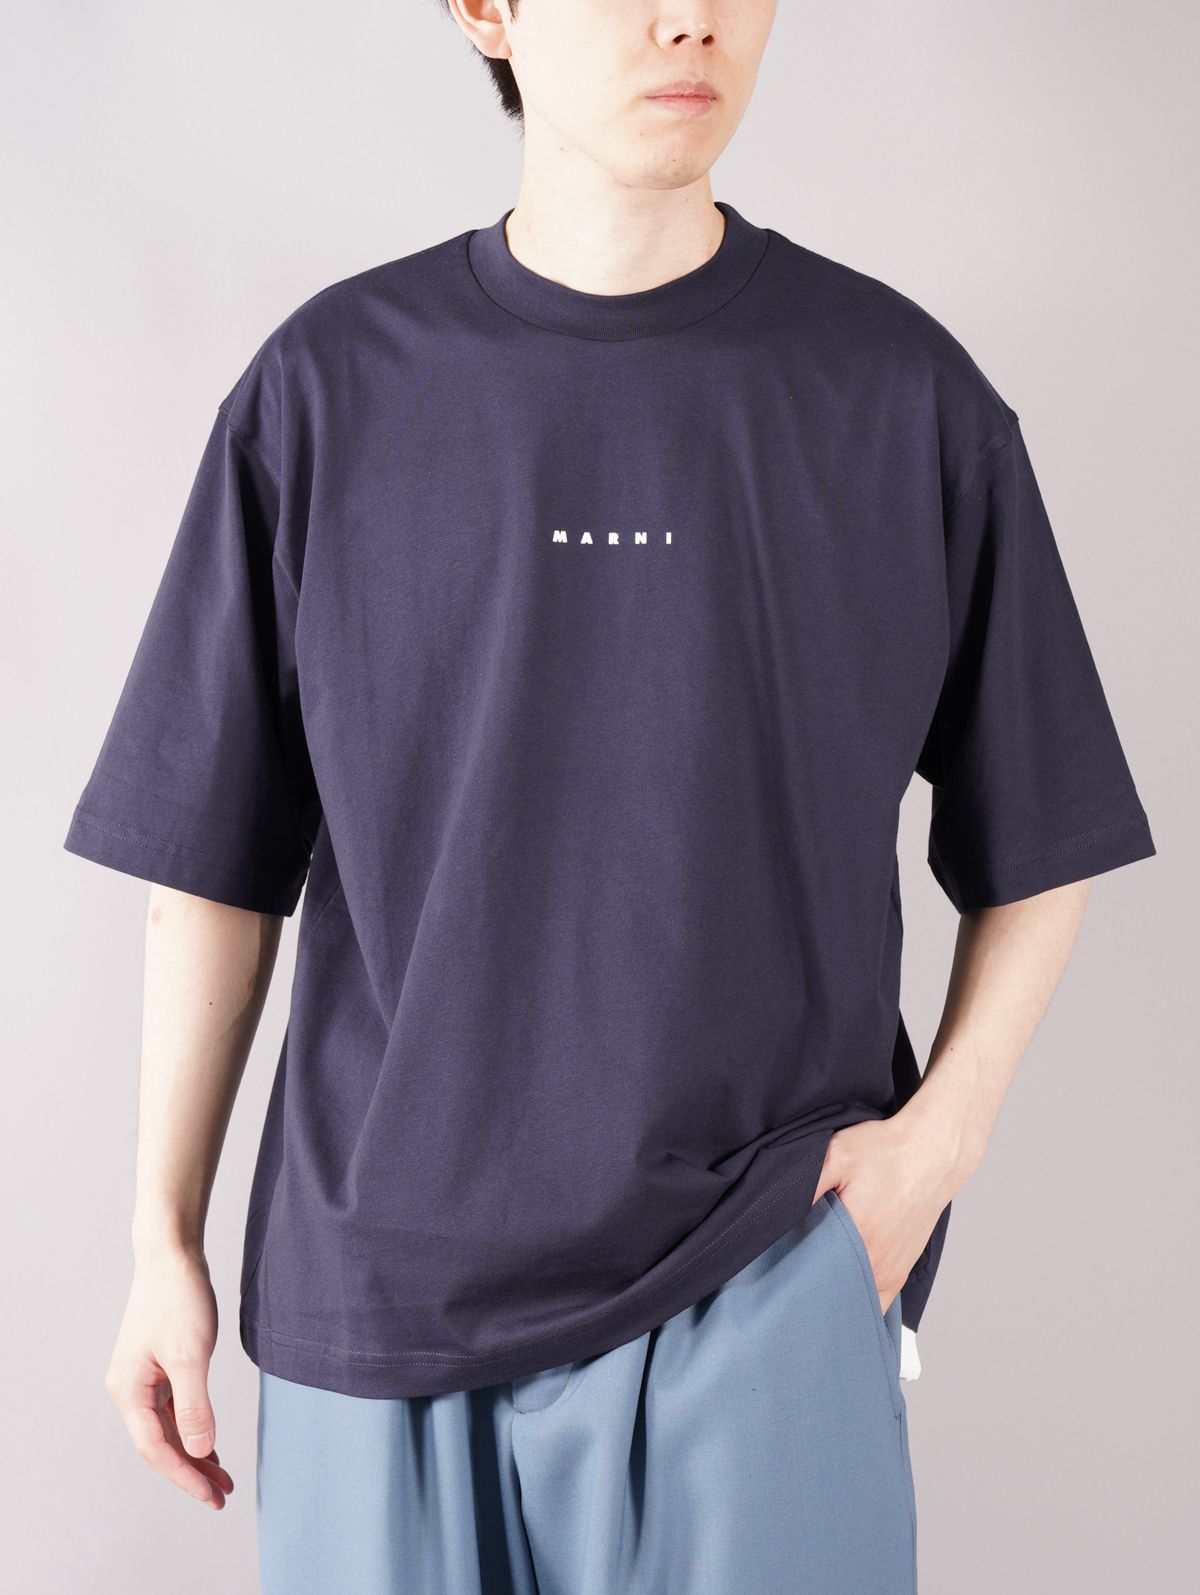 MARNI - LOGO T-SHIRT / ロゴ Tシャツ / オーバーサイズ / ホワイト 